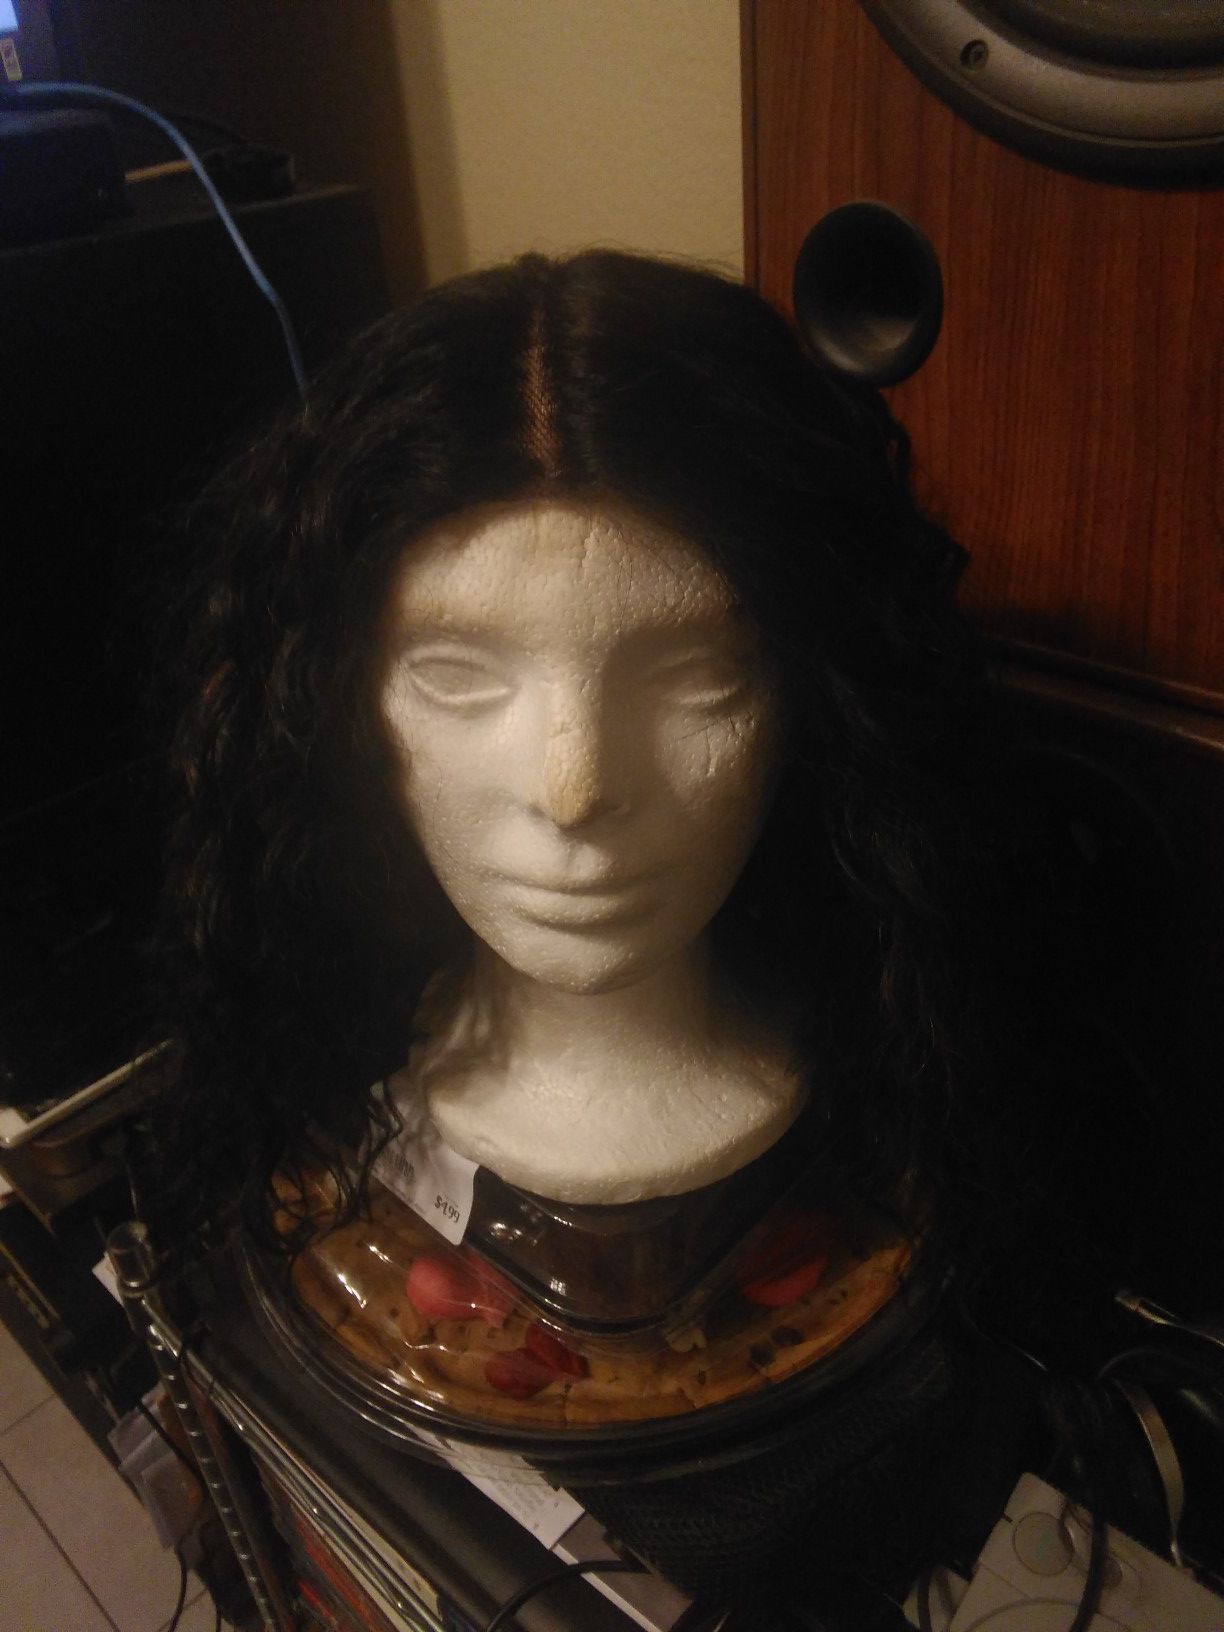 A long curly wig a half wig $25